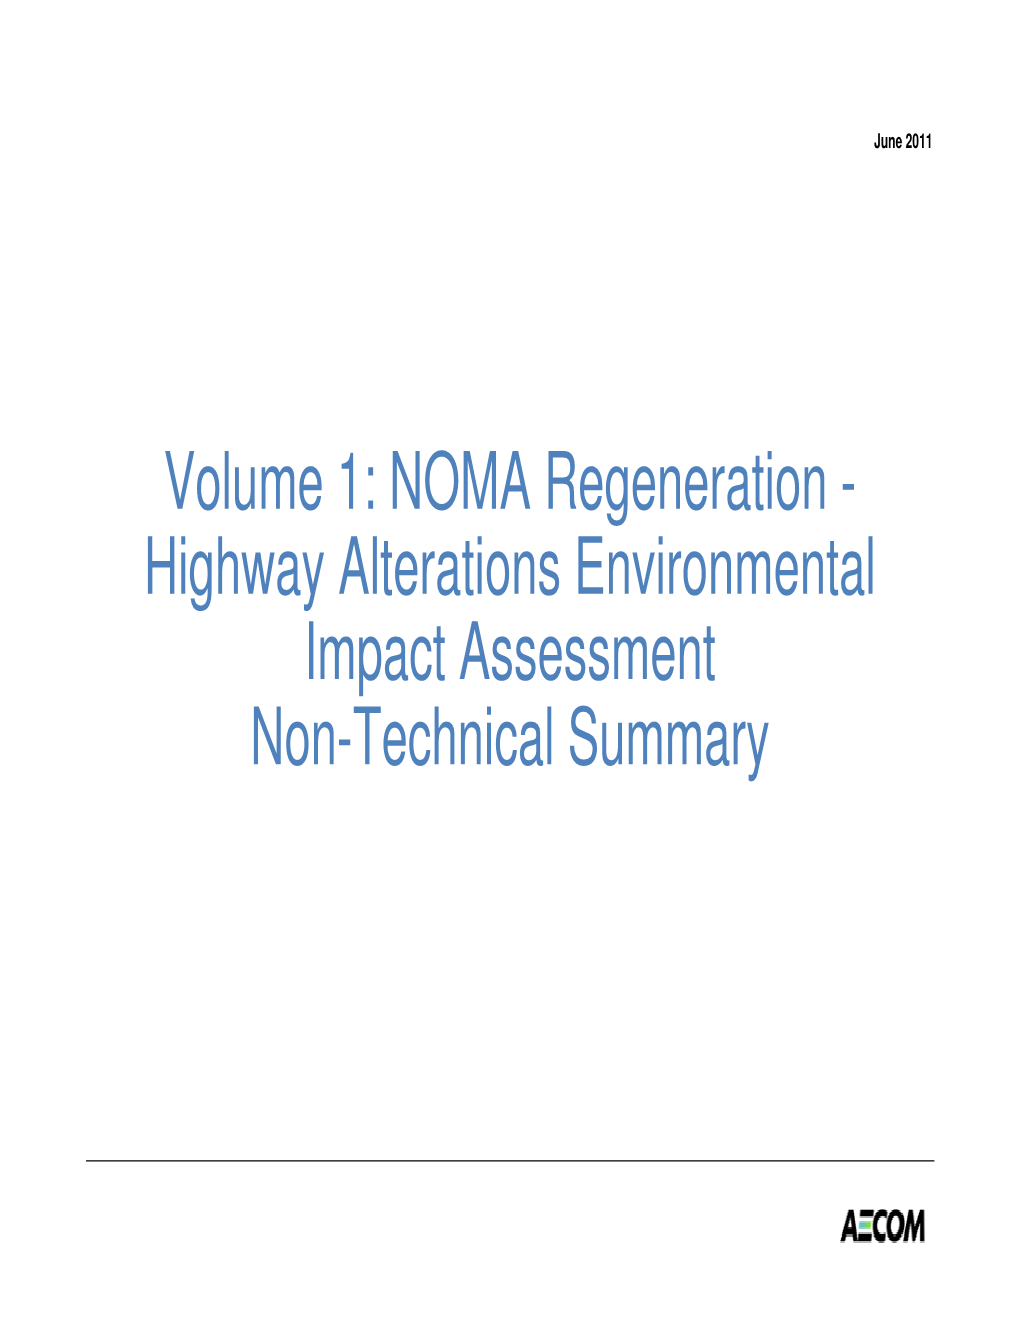 NOMA Regeneration - Highway Alterations Environmental Impact Assessment Non-Technical Summary